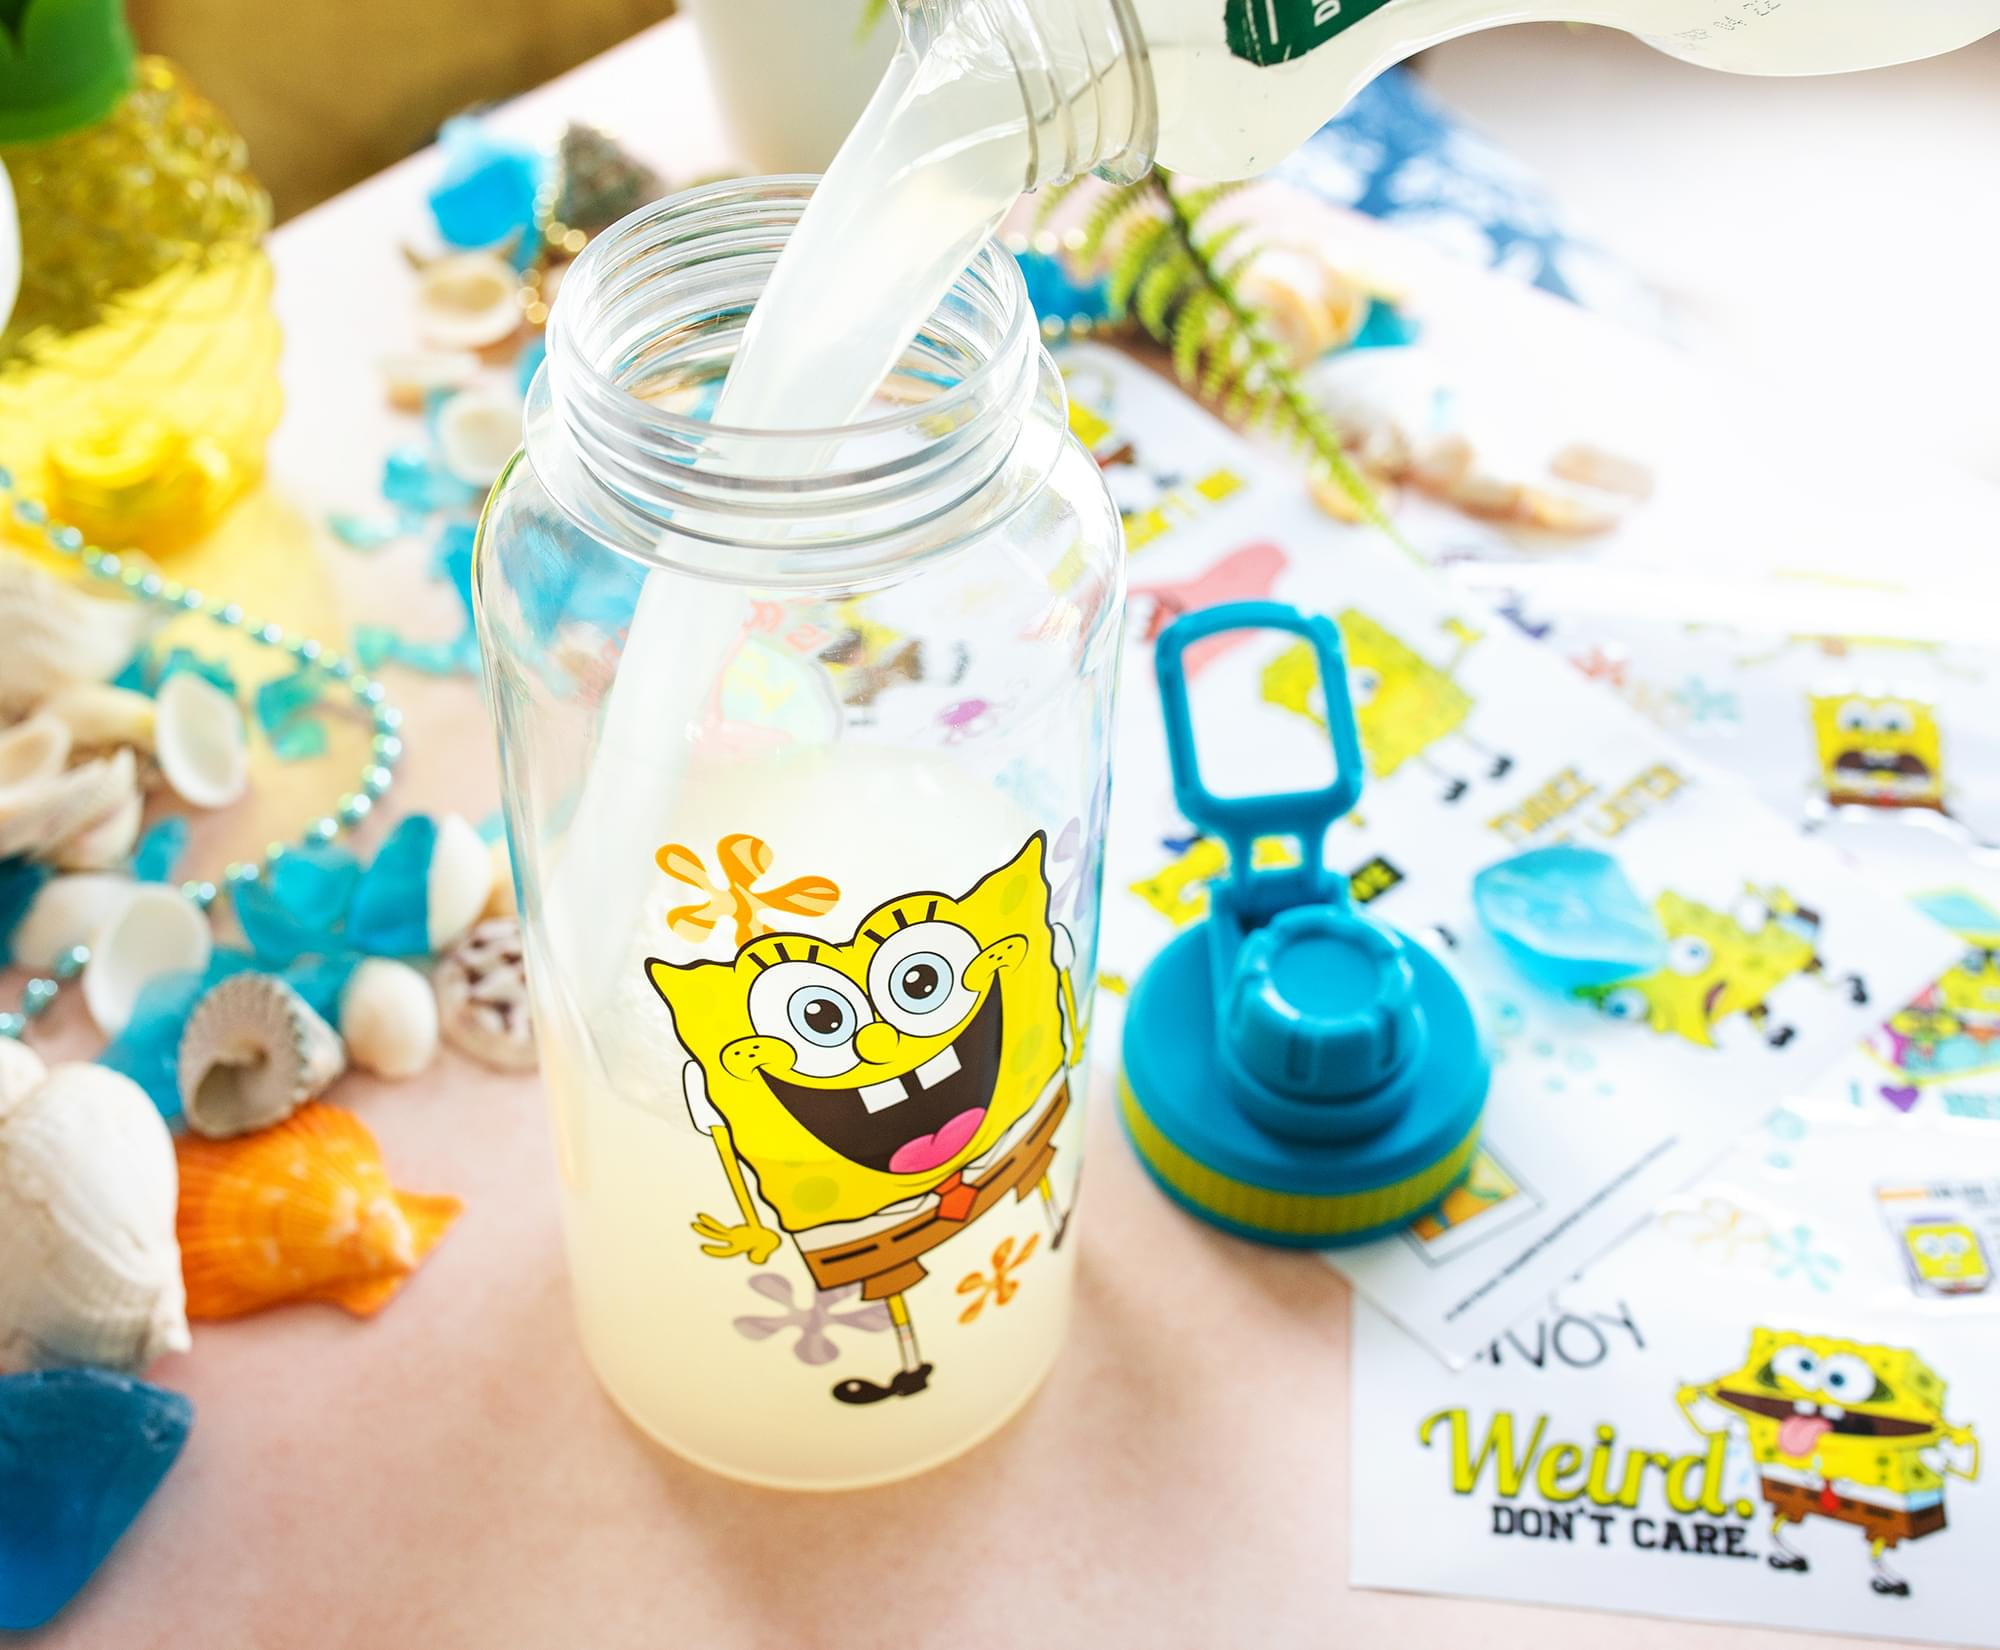 SpongeBob SquarePants Color Your Own Water Bottle